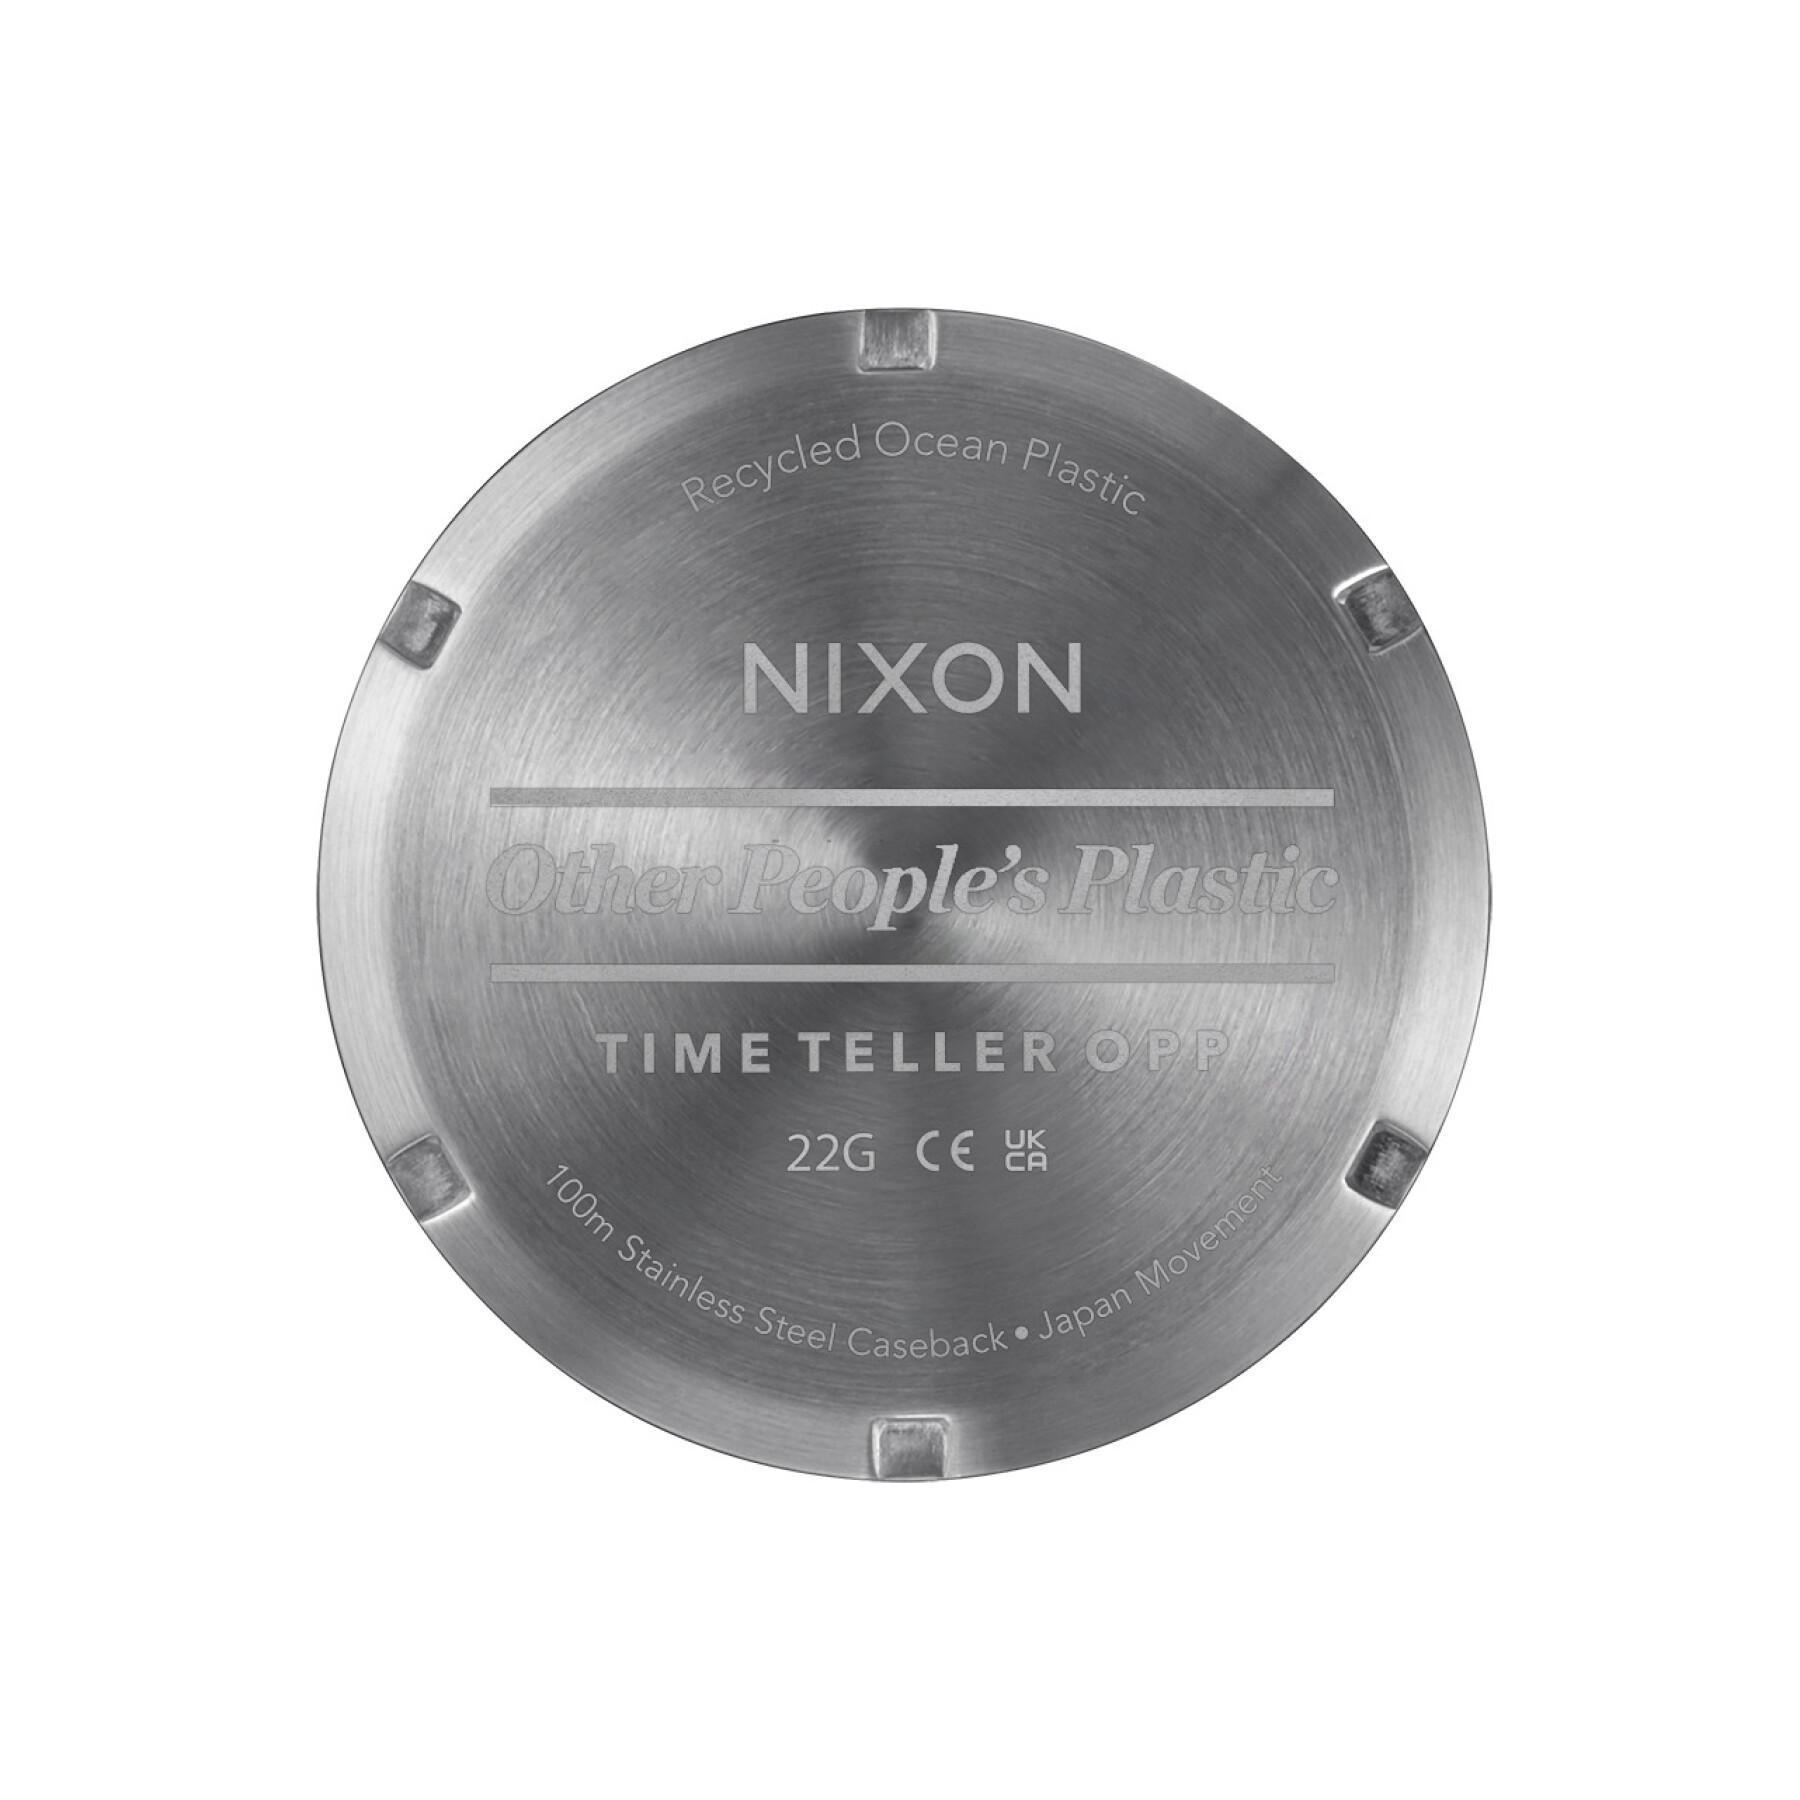 Guarda Nixon Time Teller Opp